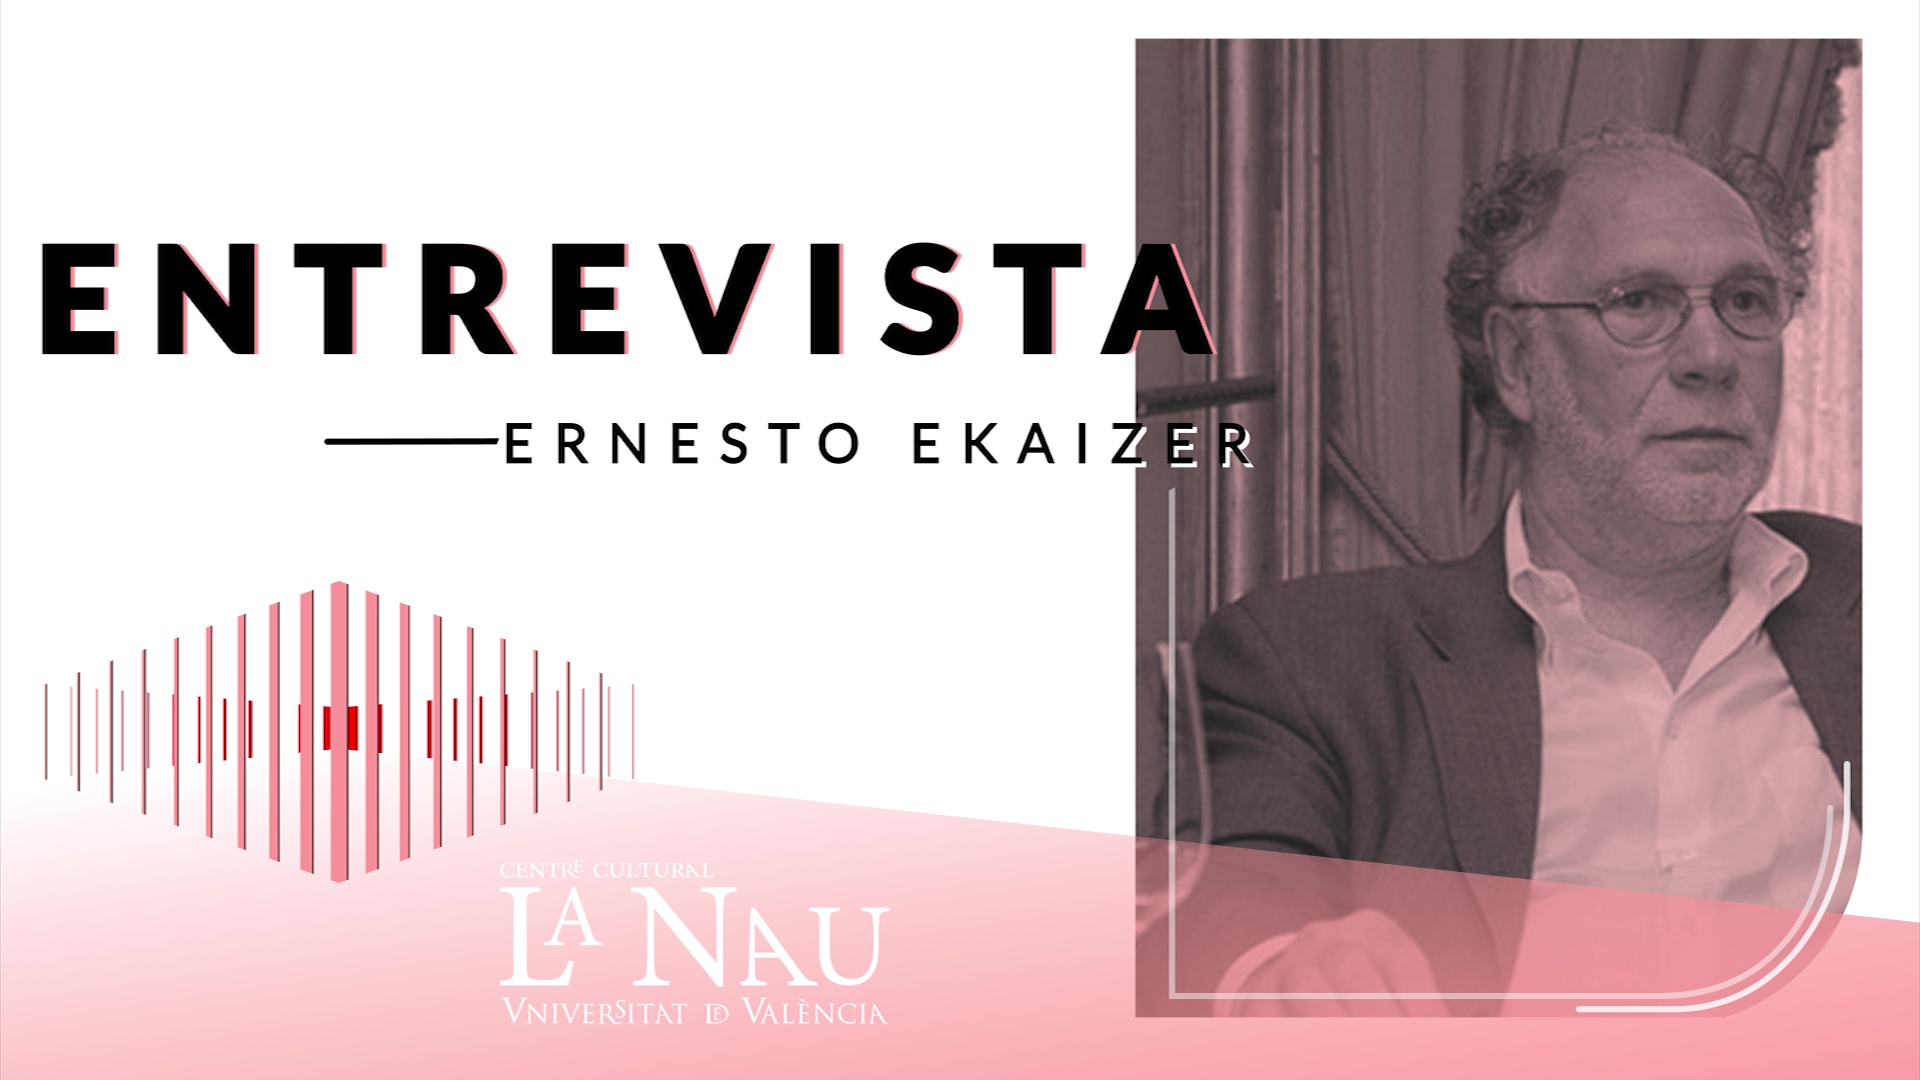 Entrevista a La Nau. Ernesto Ekaizer